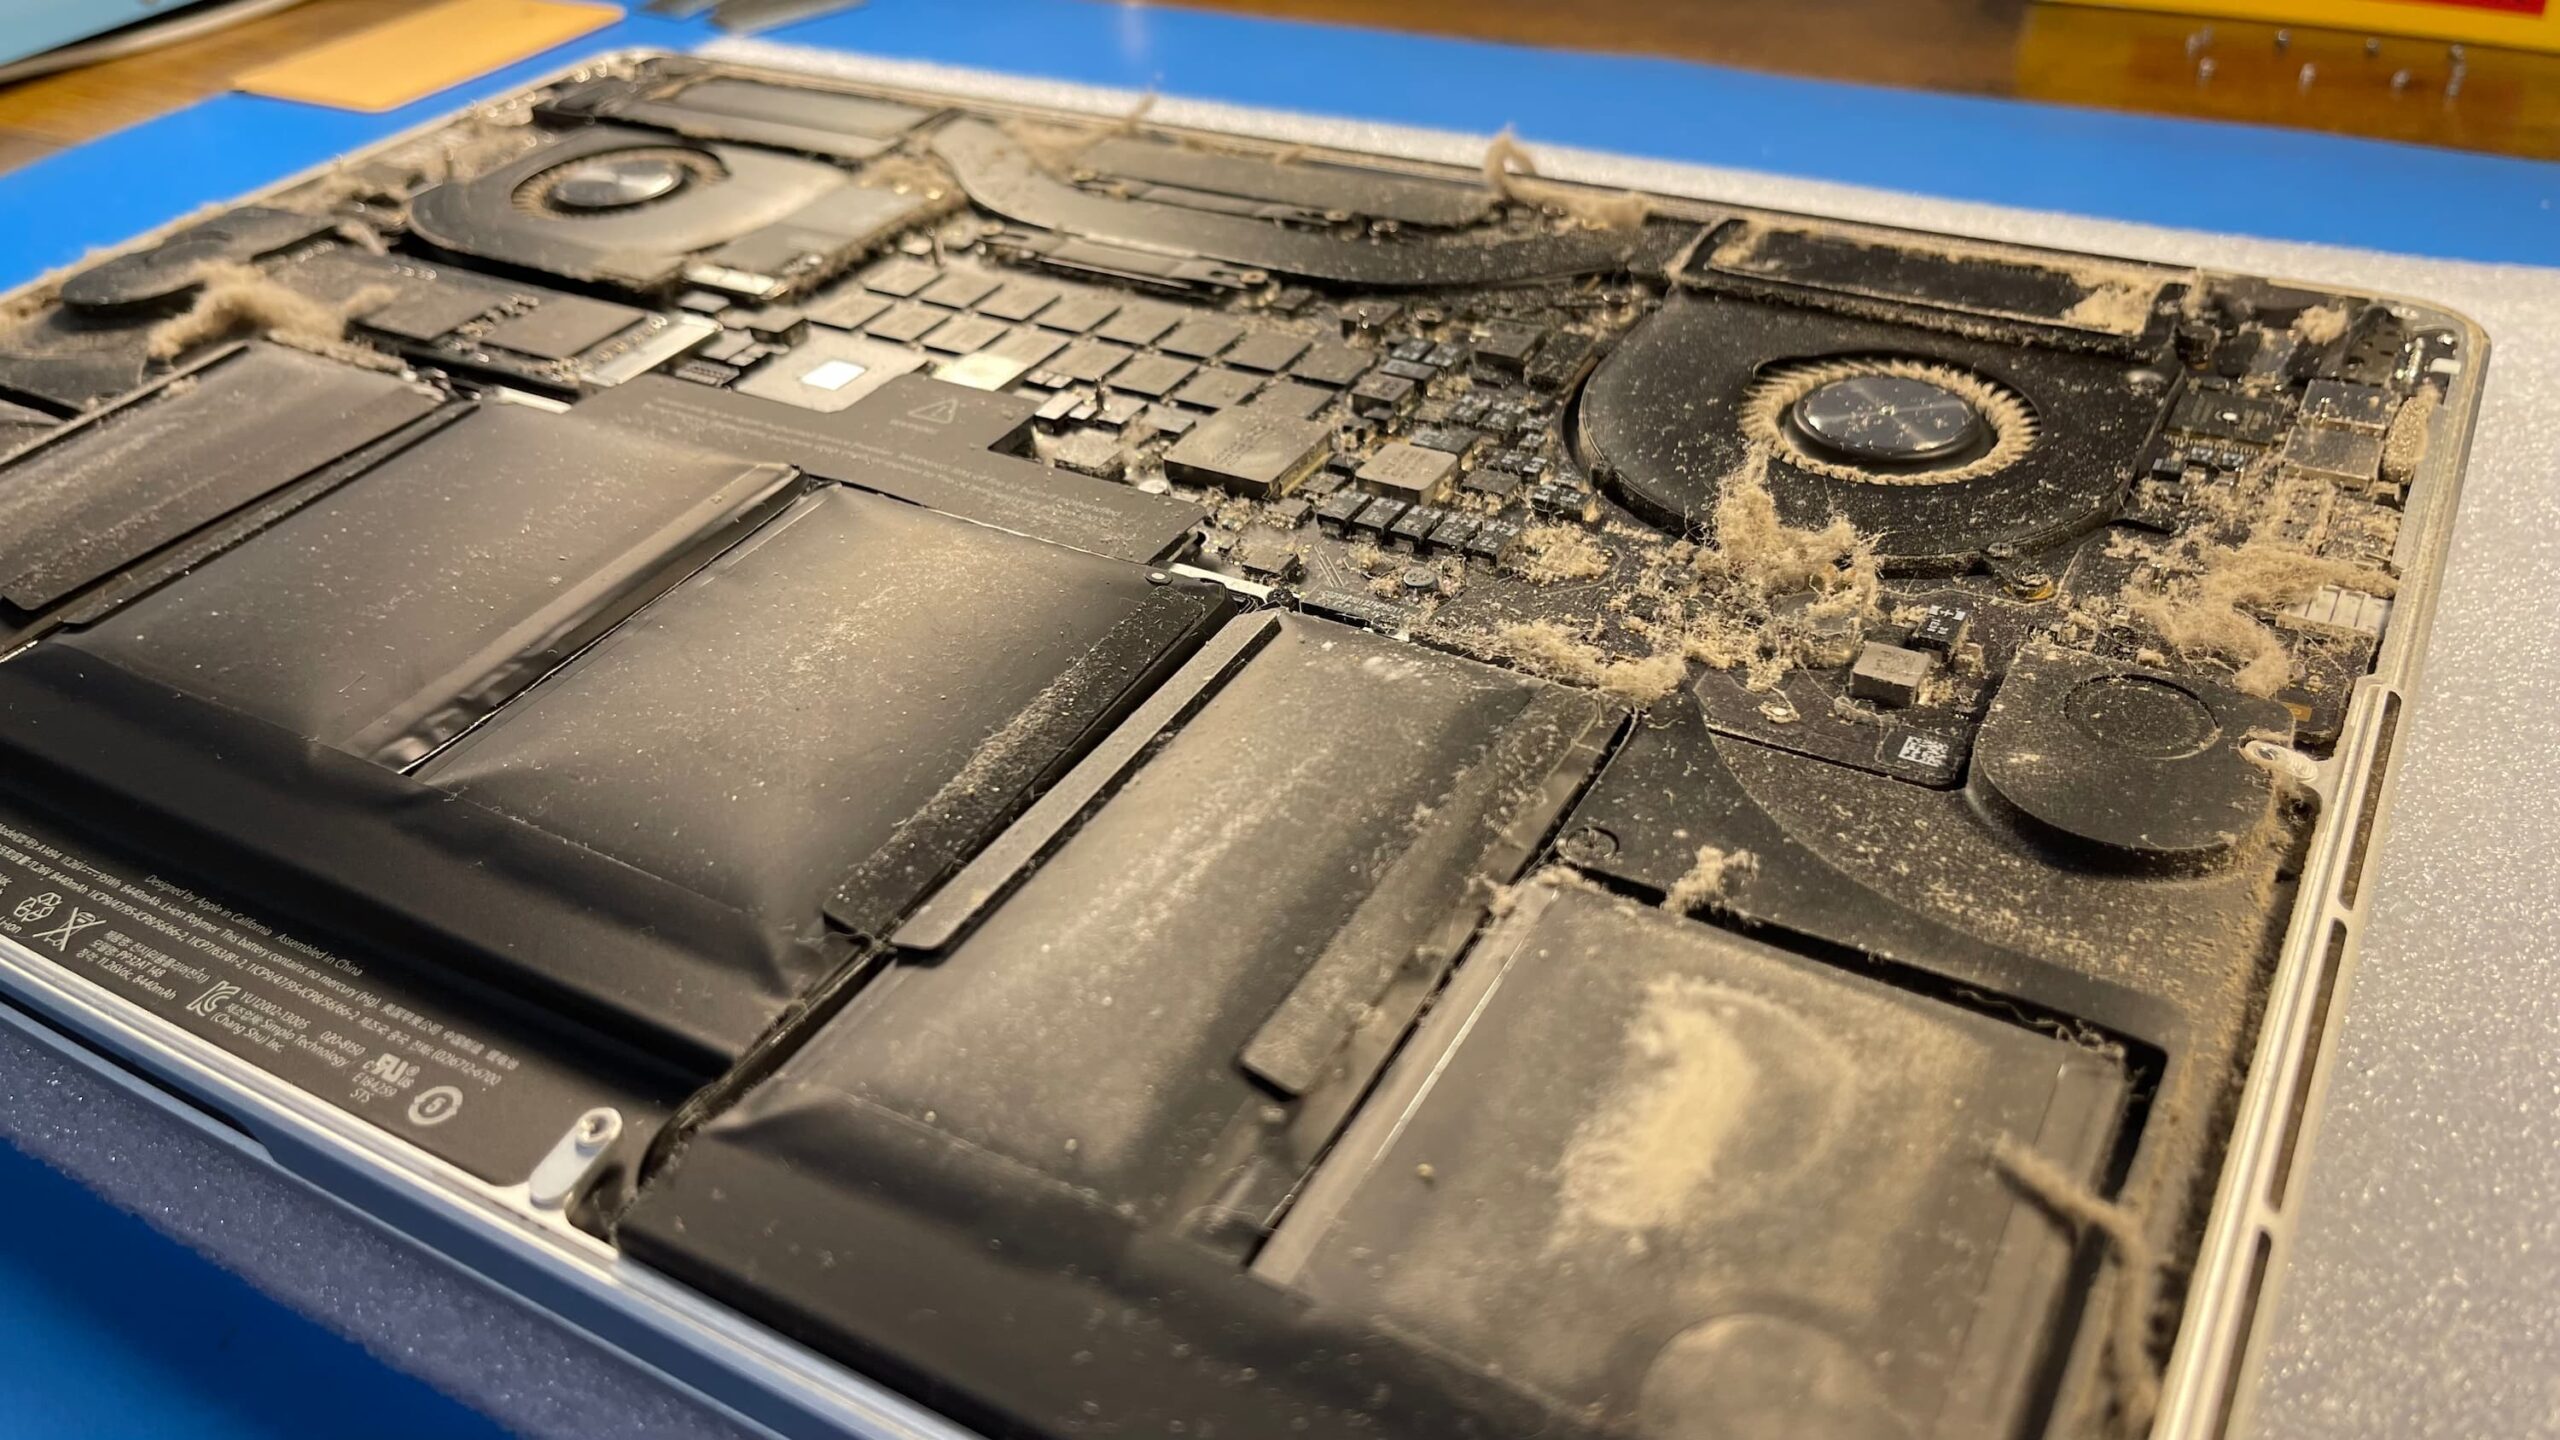 Swollen battery and dust in 2014 MacBook Pro.